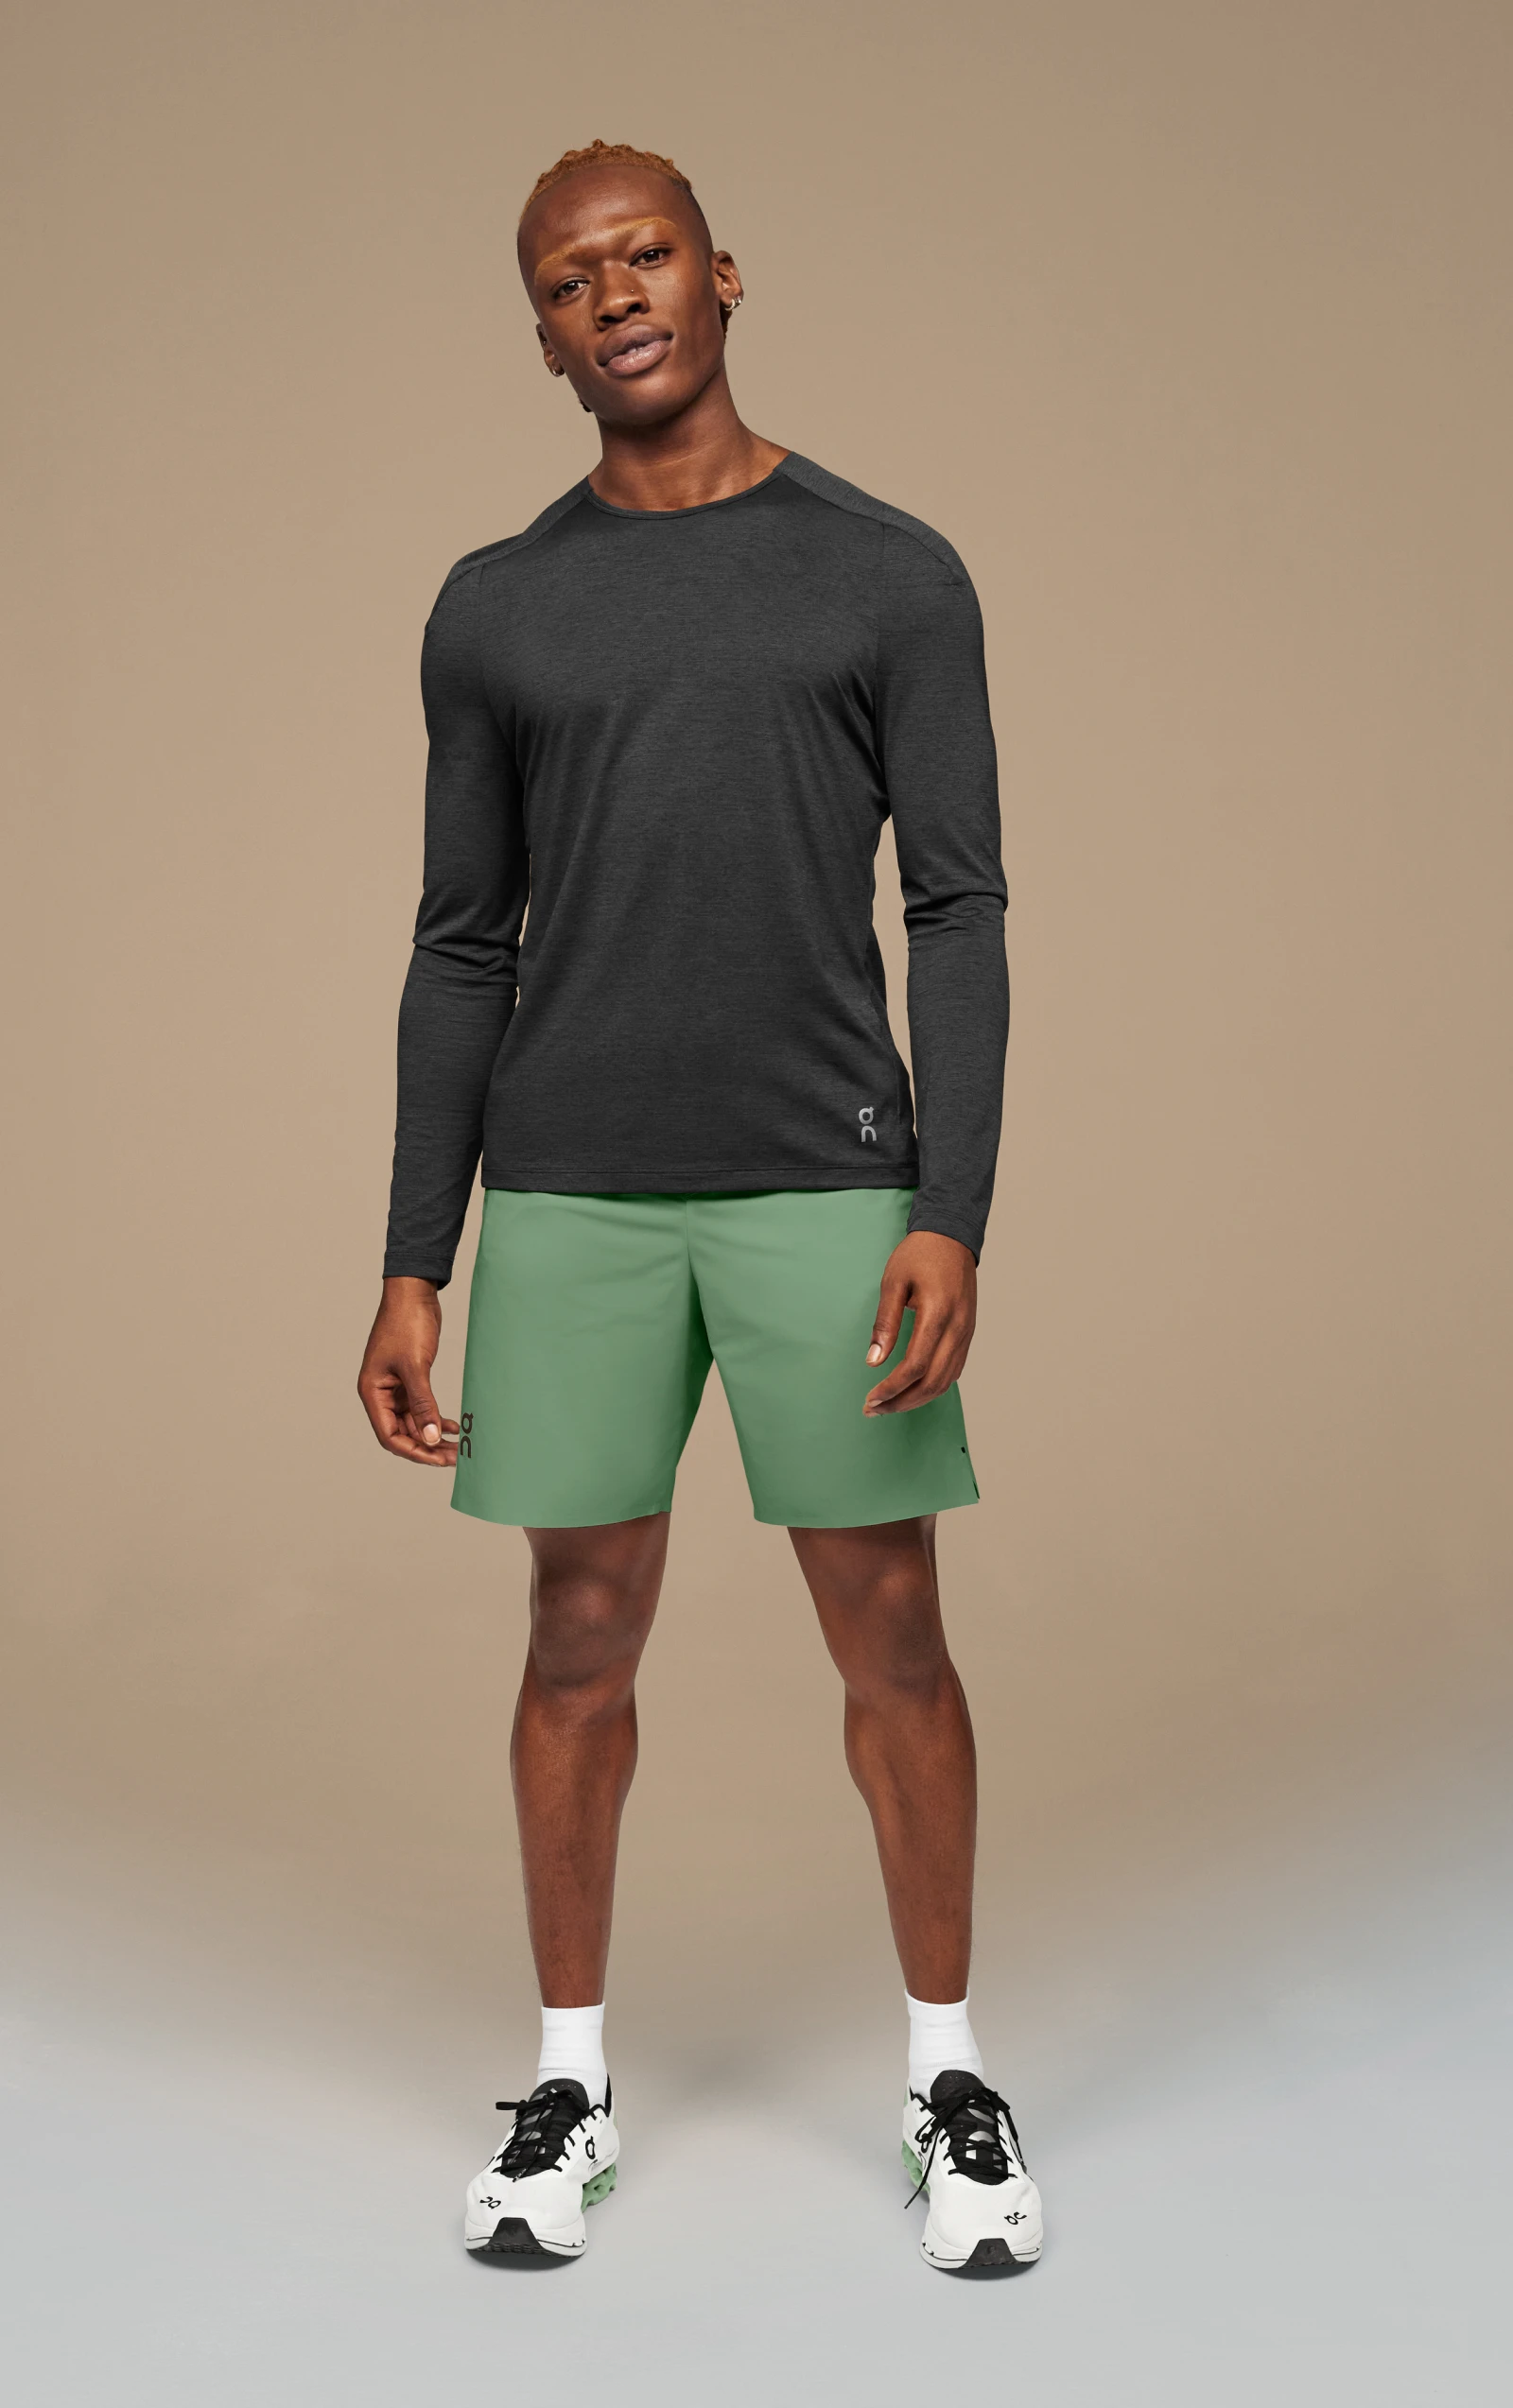 Hybrid Shorts - Combined running shorts & tights